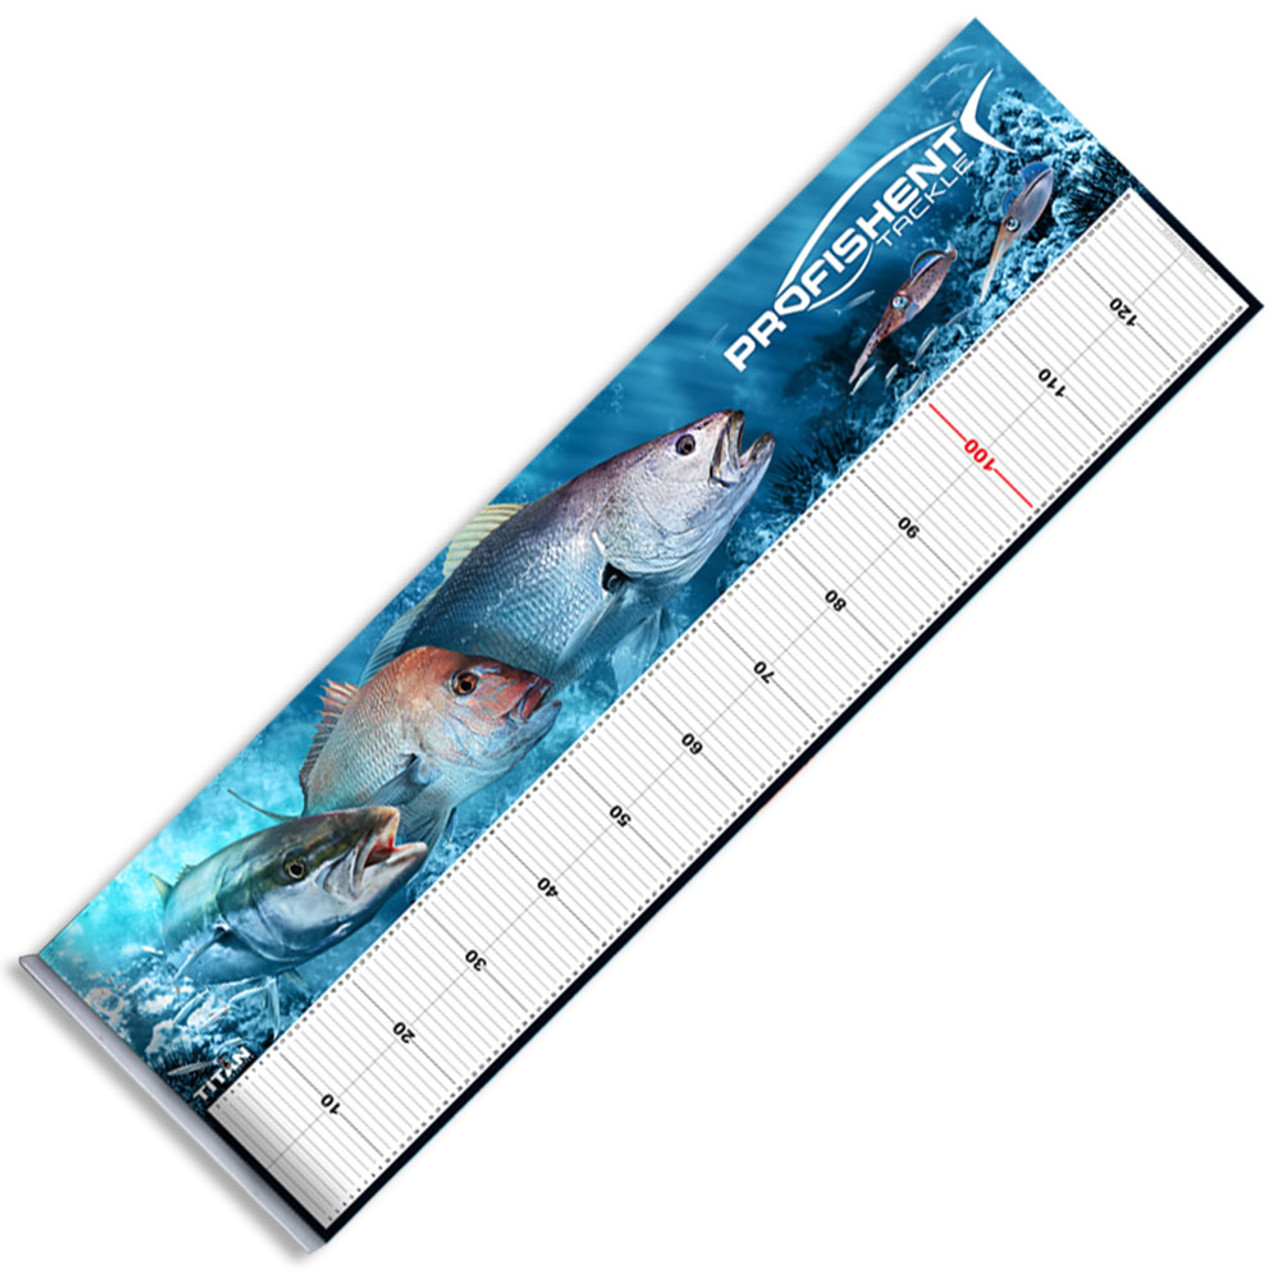 https://cdn11.bigcommerce.com/s-55834/images/stencil/1280x1280/products/5014/18442/mmksj-kingfish-snapper-jewfish-fish-measure-mat__15353.1648962975.jpg?c=2